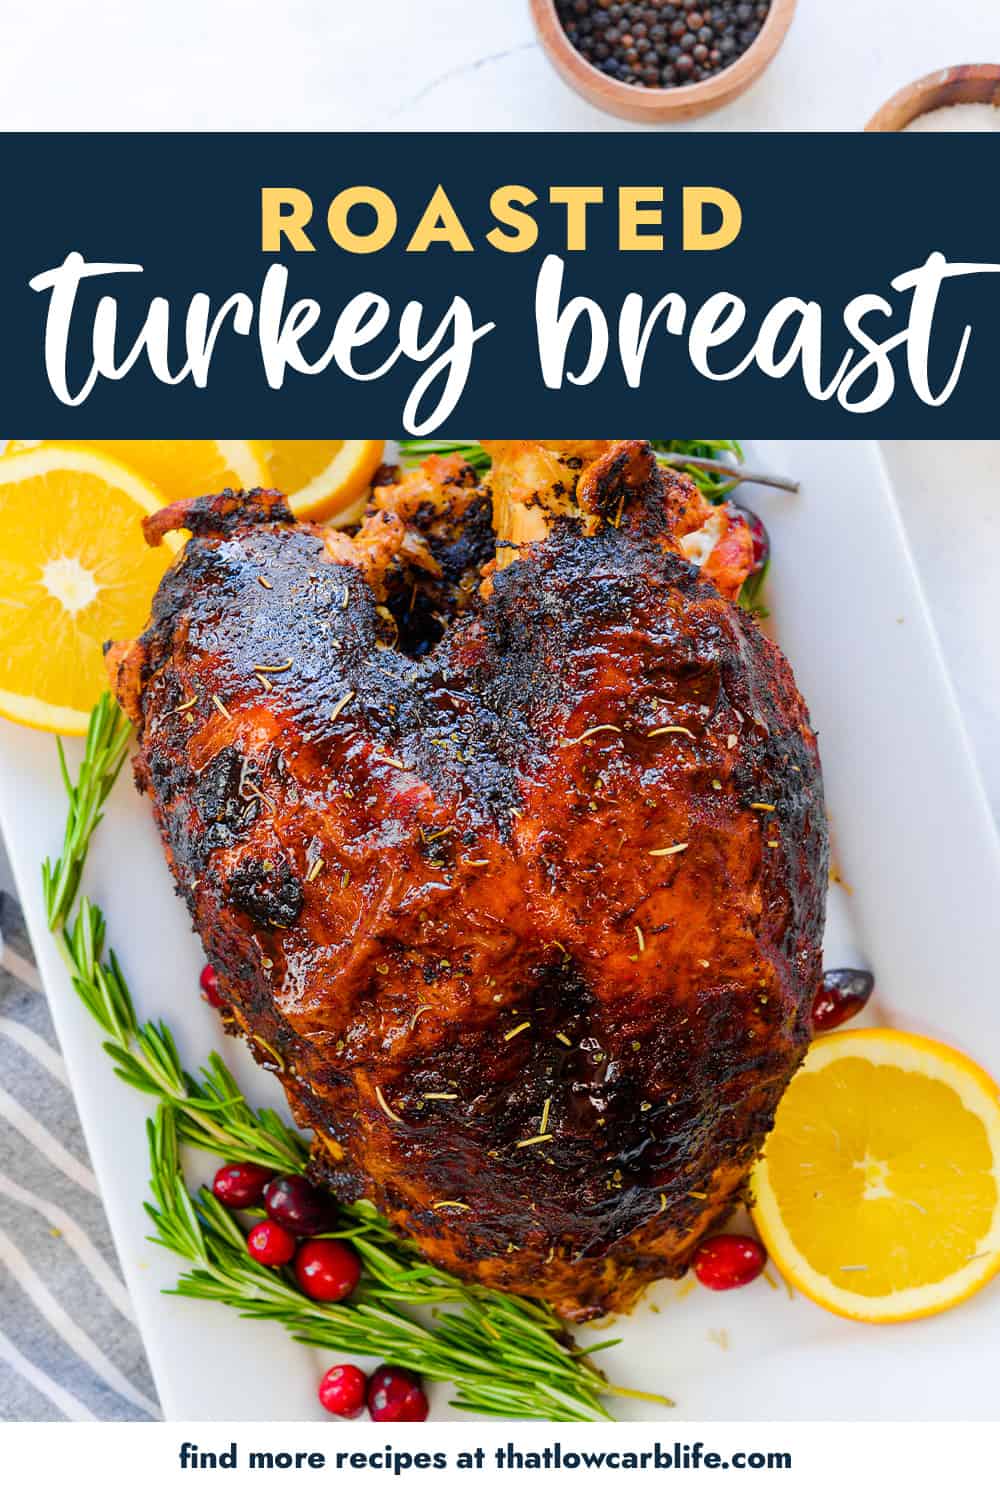 Oven roasted turkey breast on platter.